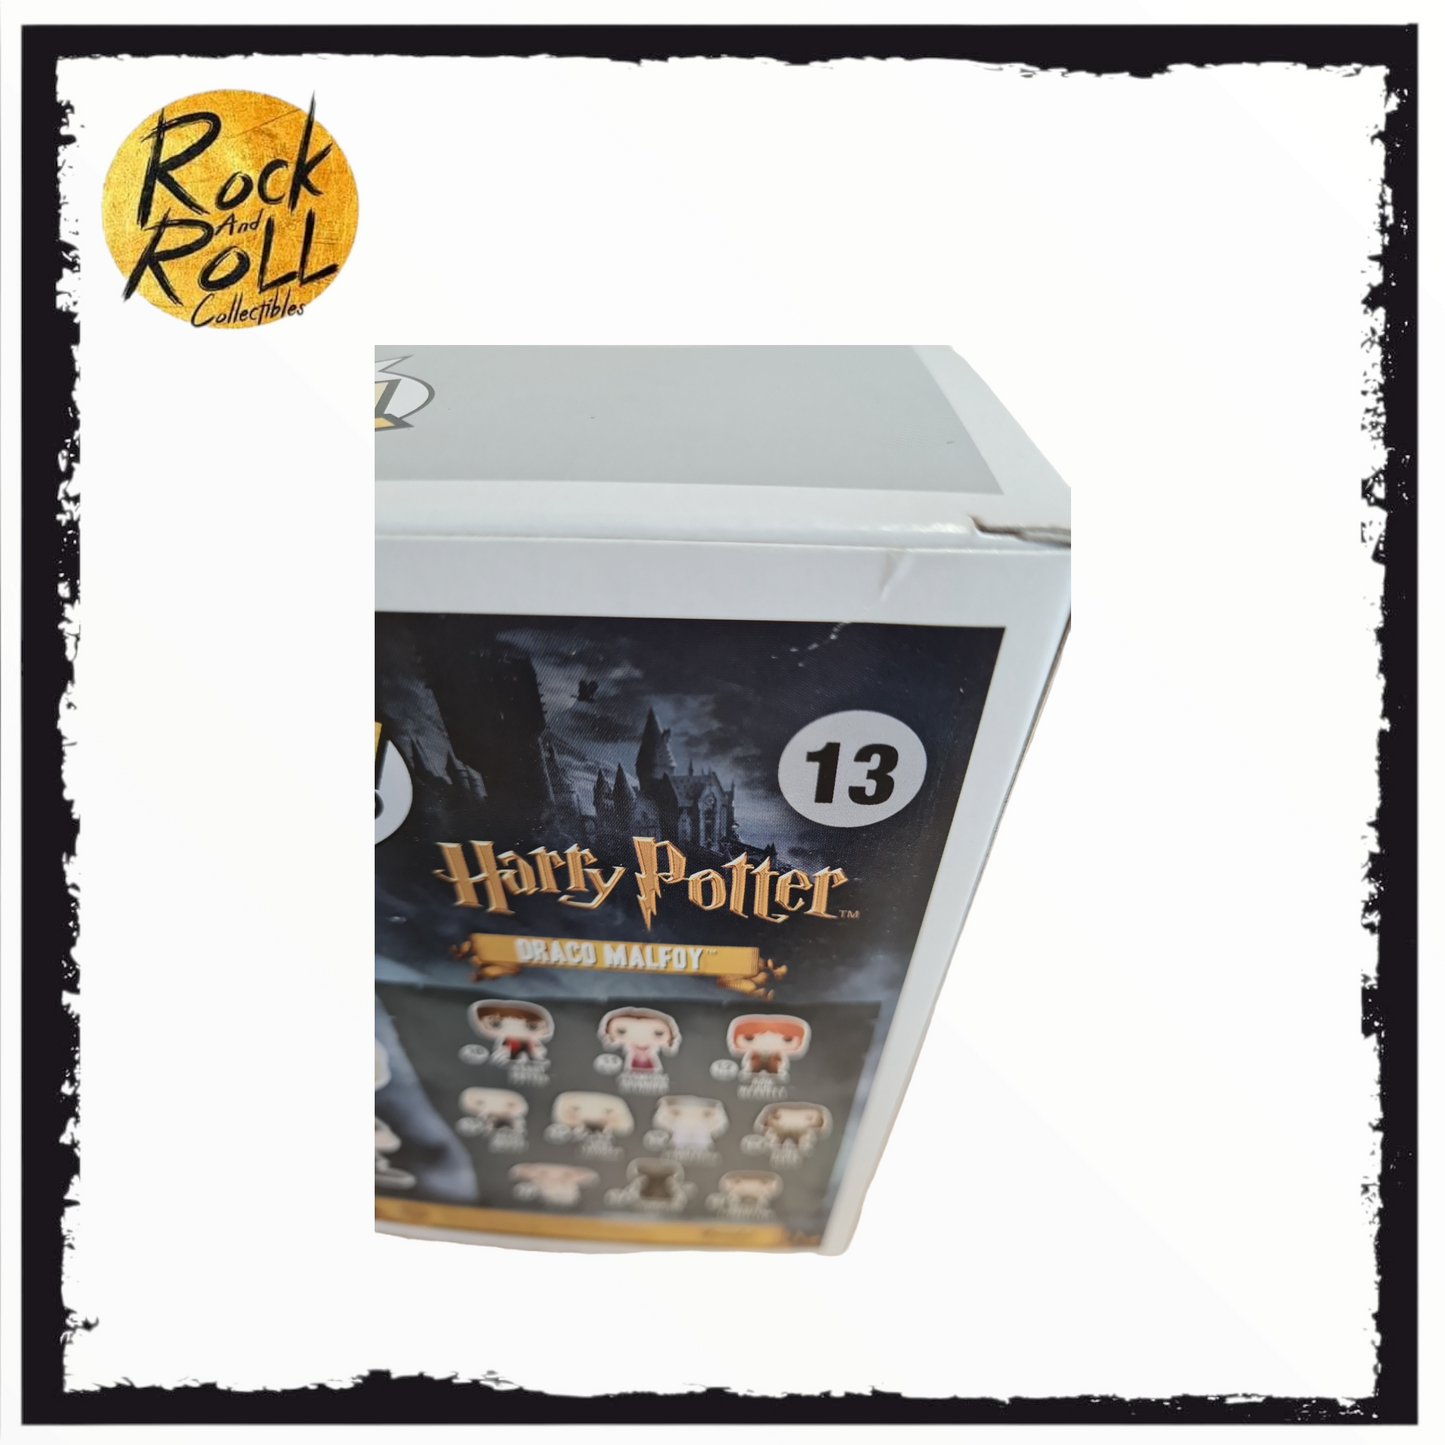 Harry Potter - Draco Malfoy Funko Pop! #13 Condition 7/10